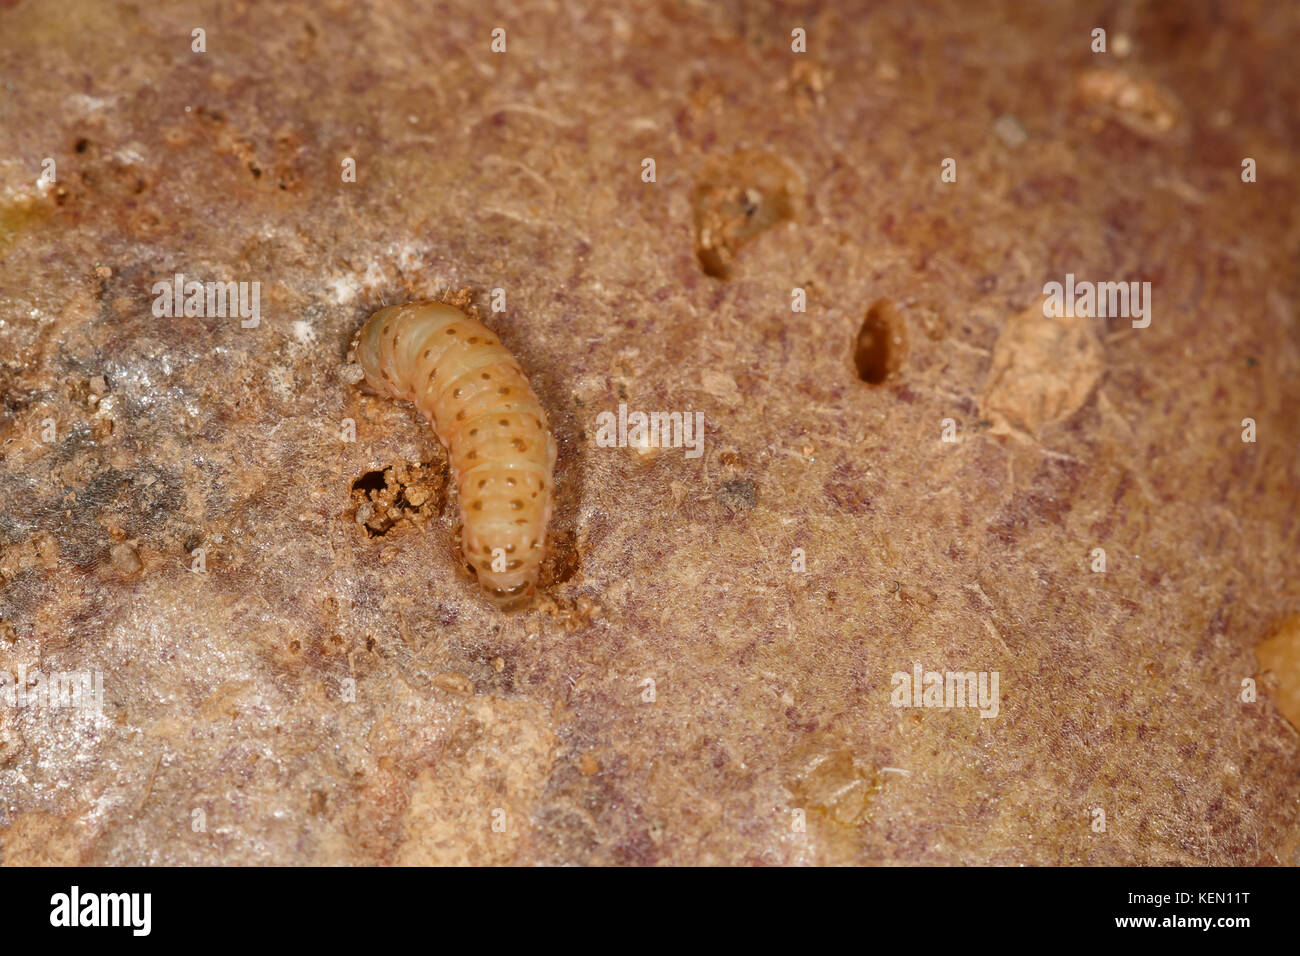 Larvae of the Central American potato tuberworm (Guatemalan potato moth) Tecia solanivora (Povolny) on a potato tuber Stock Photo